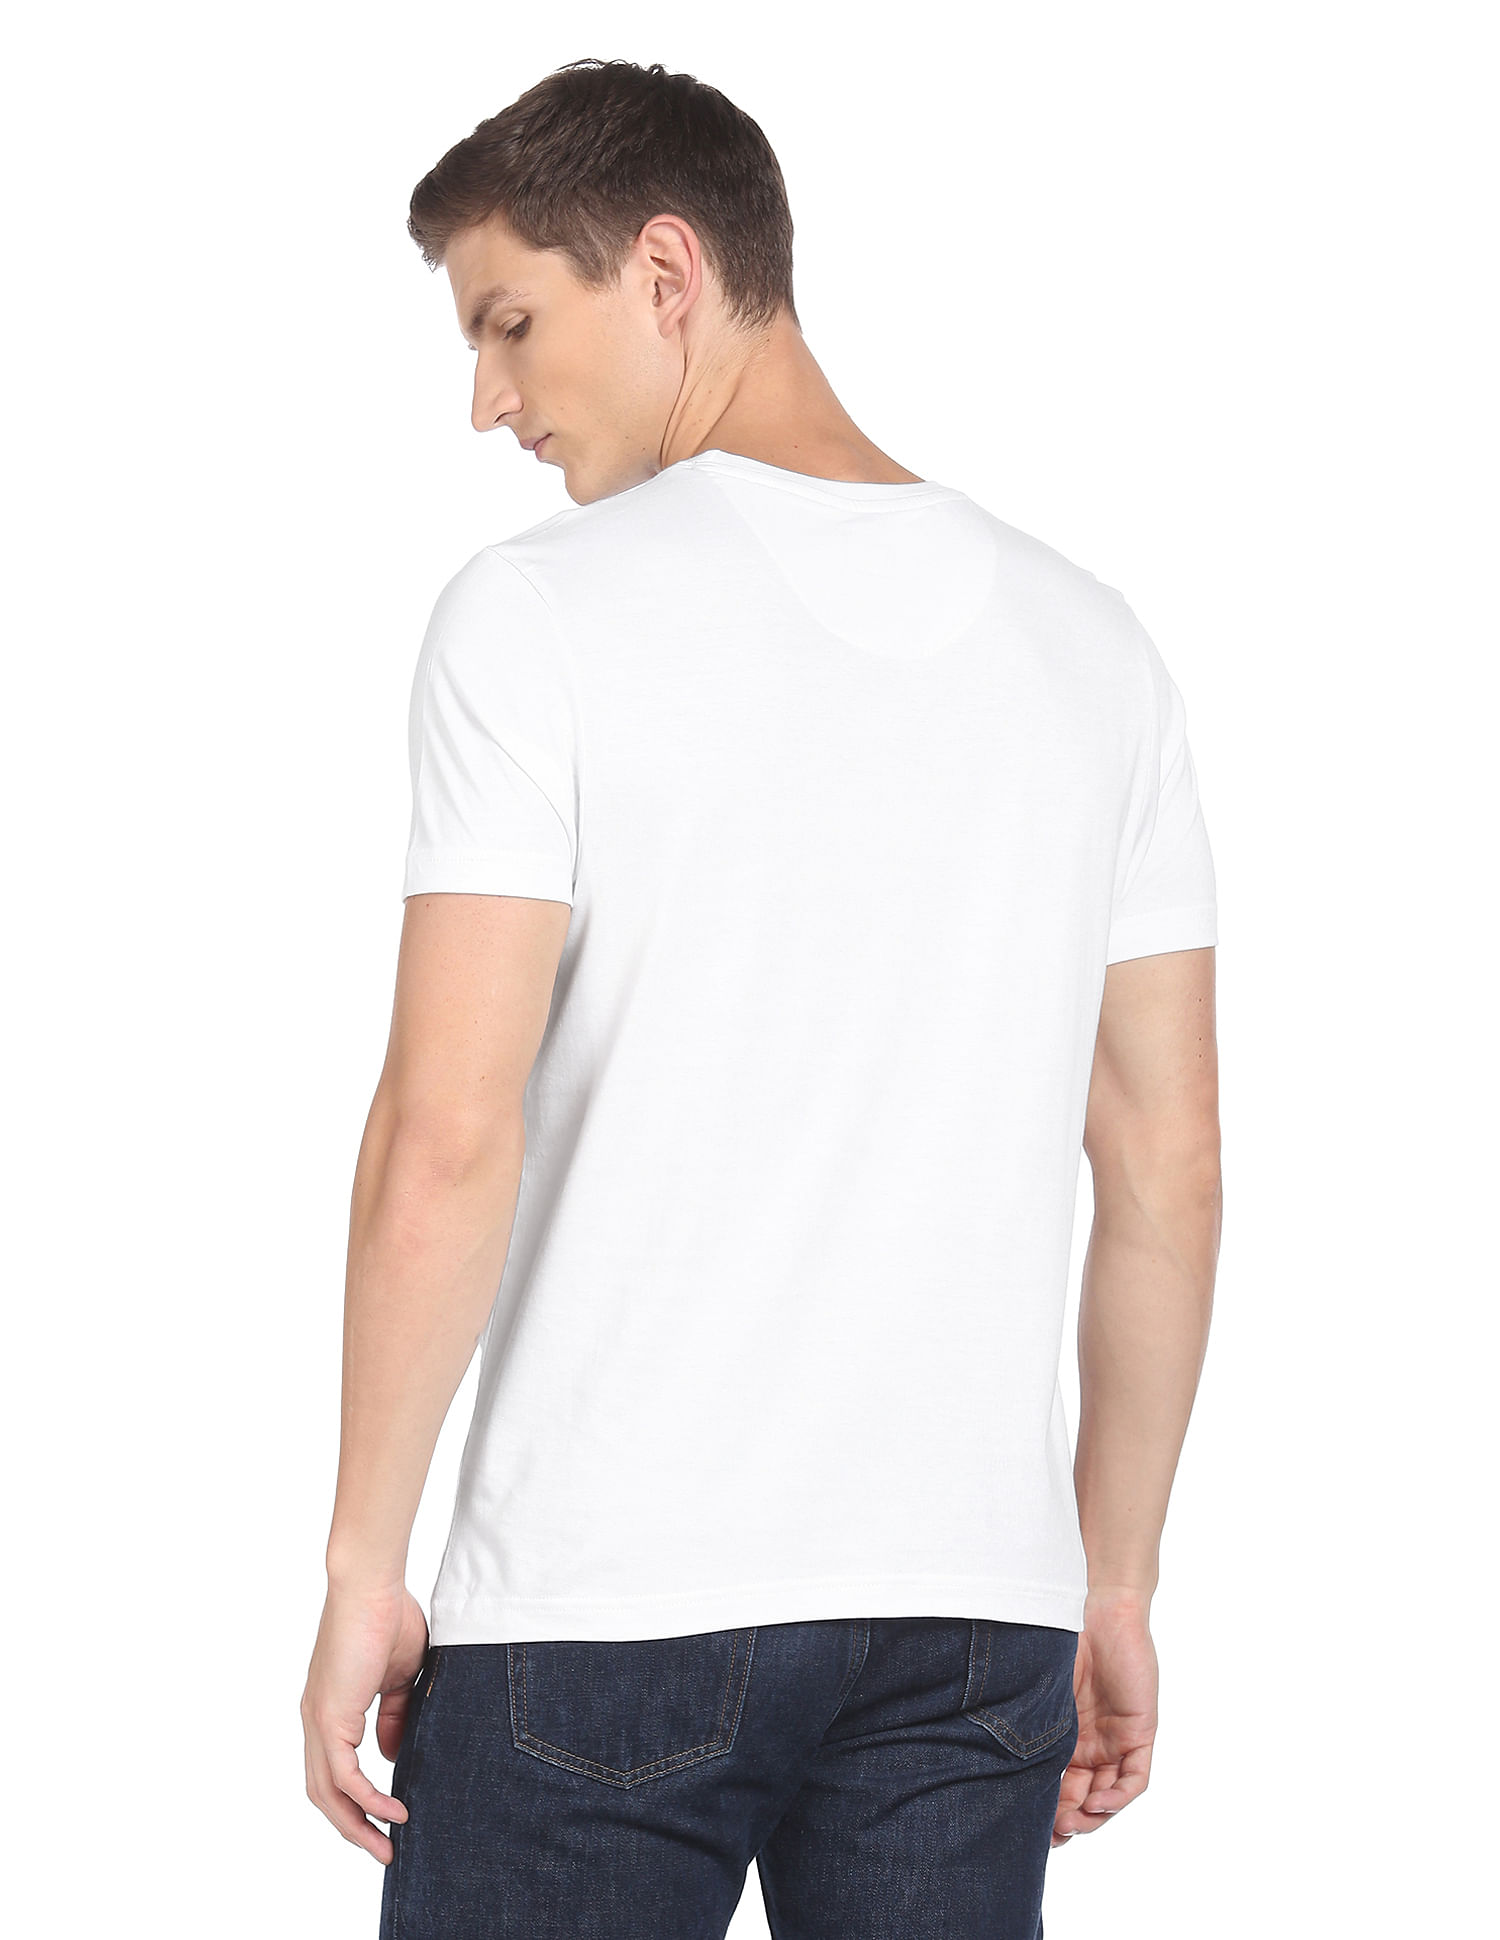 Logo Print Cotton T-shirt in White - Men